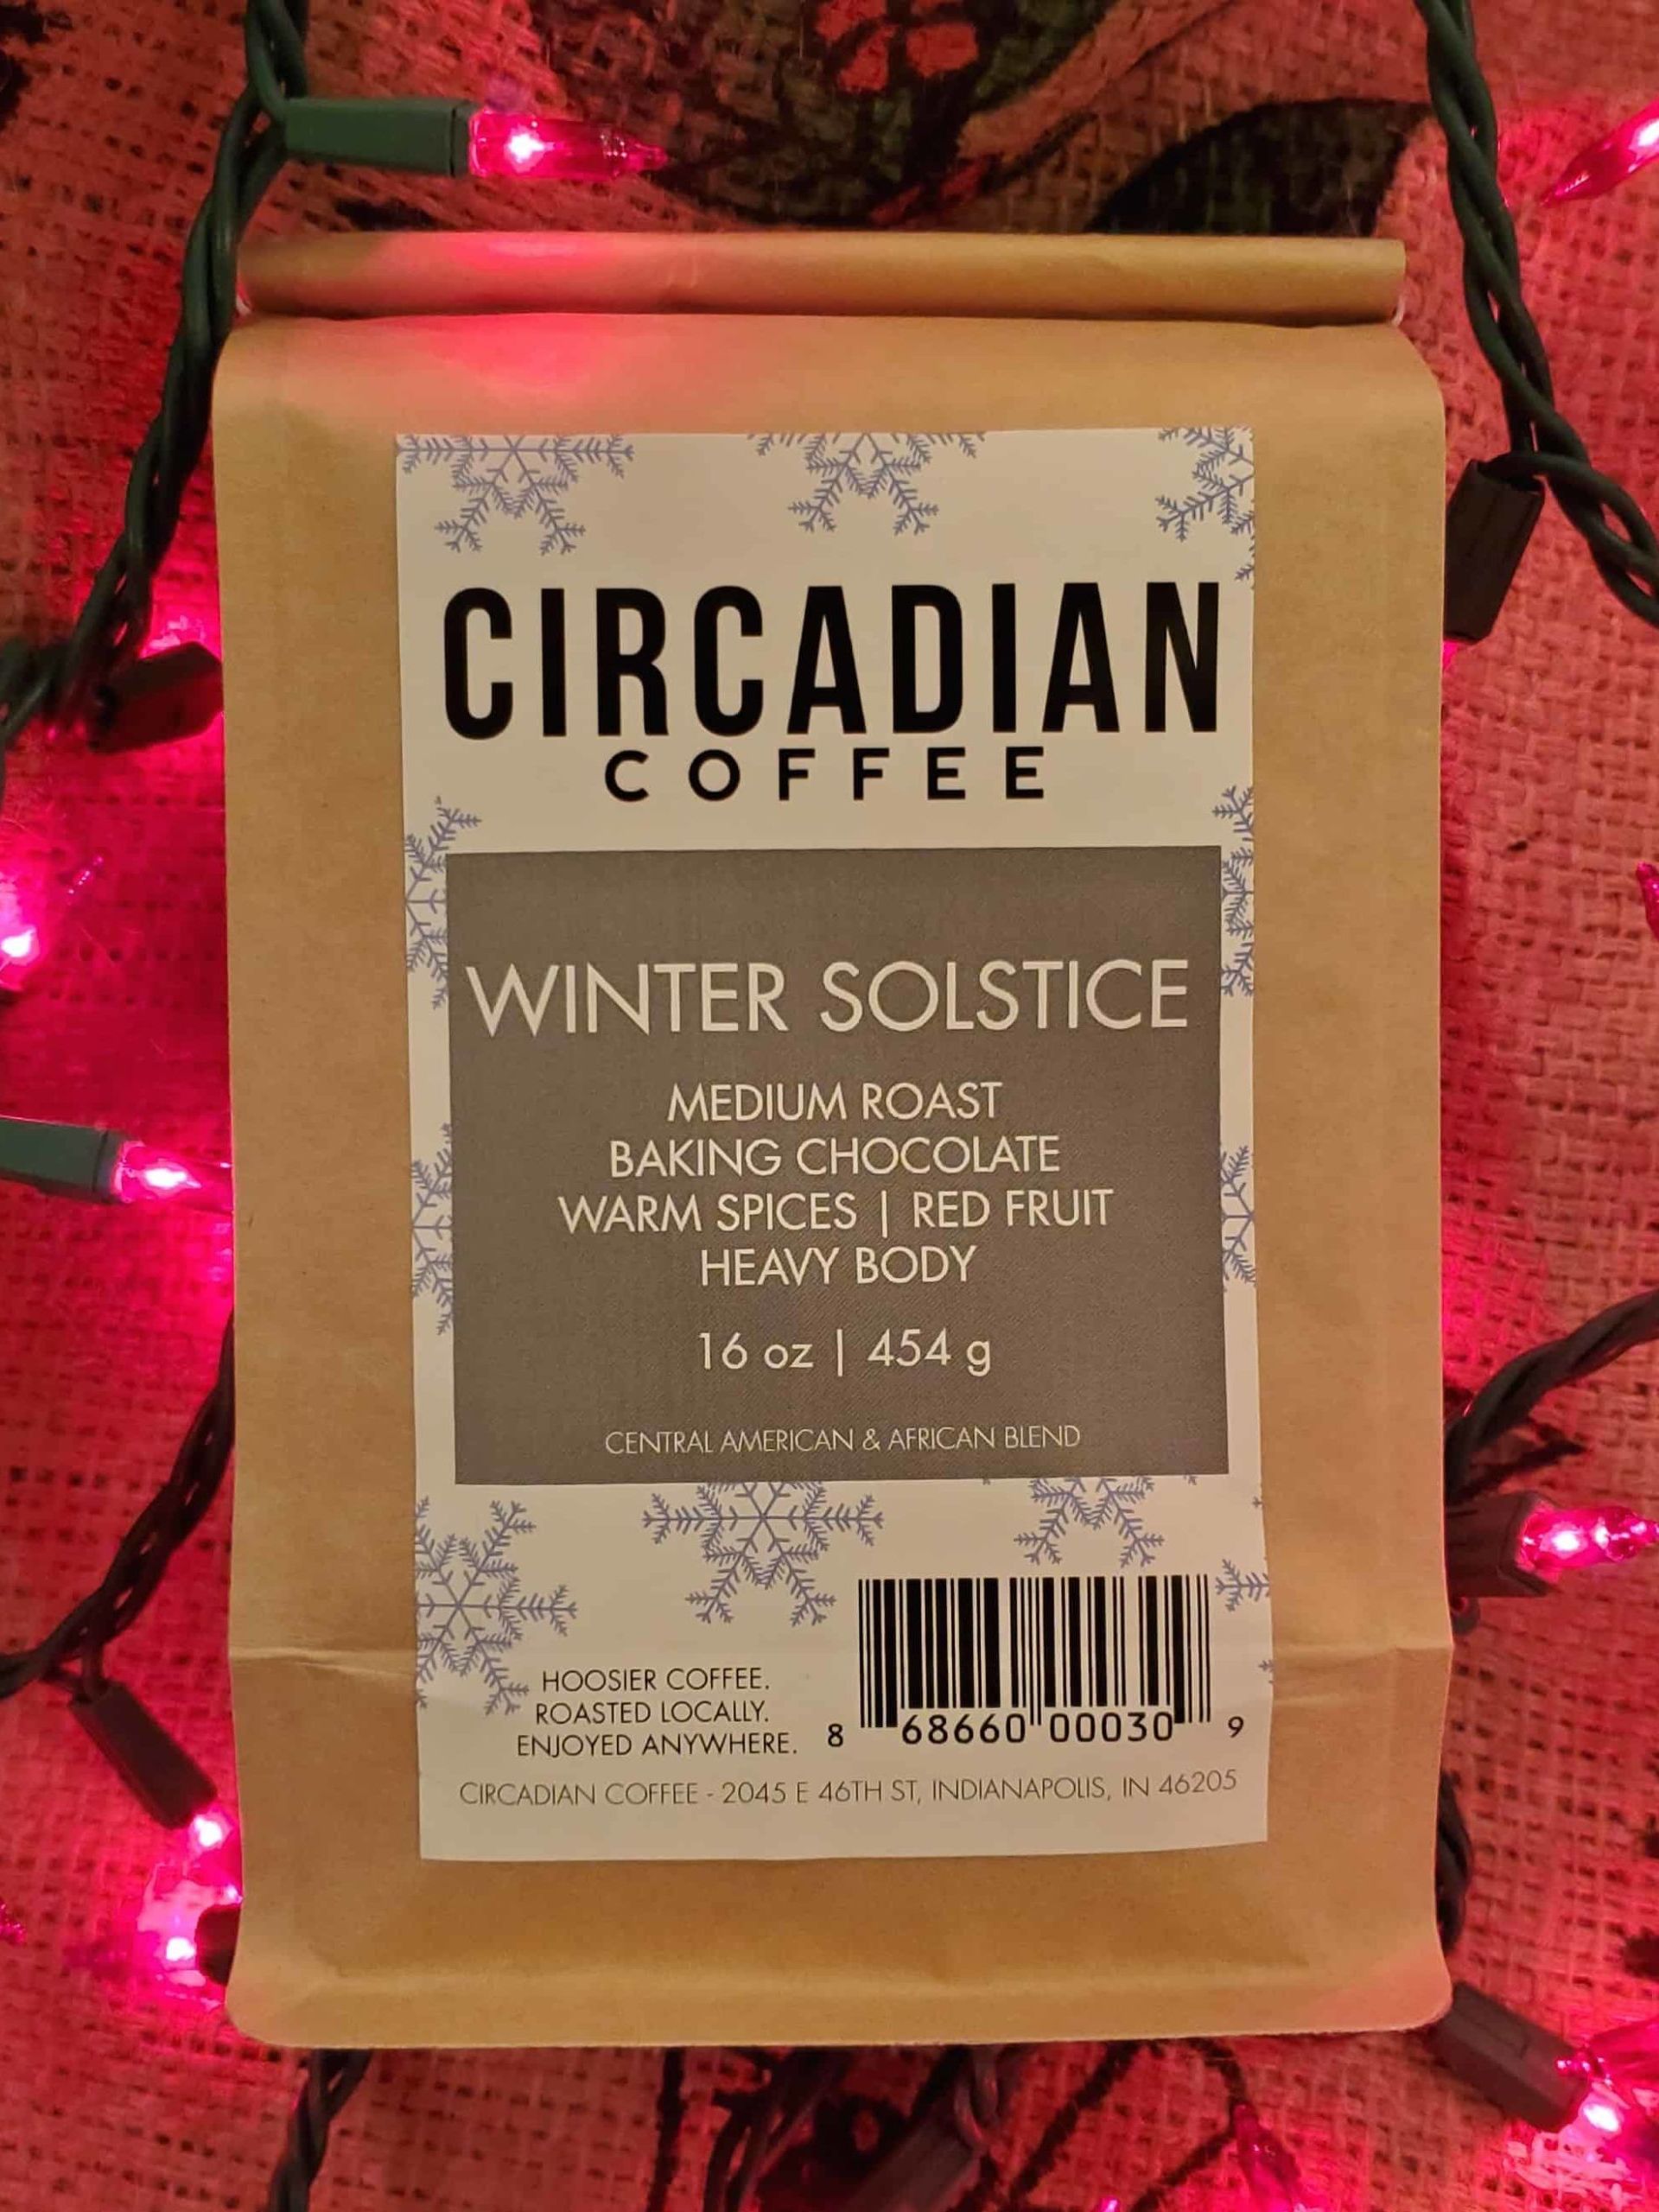 Circadian coffee - winter solstice